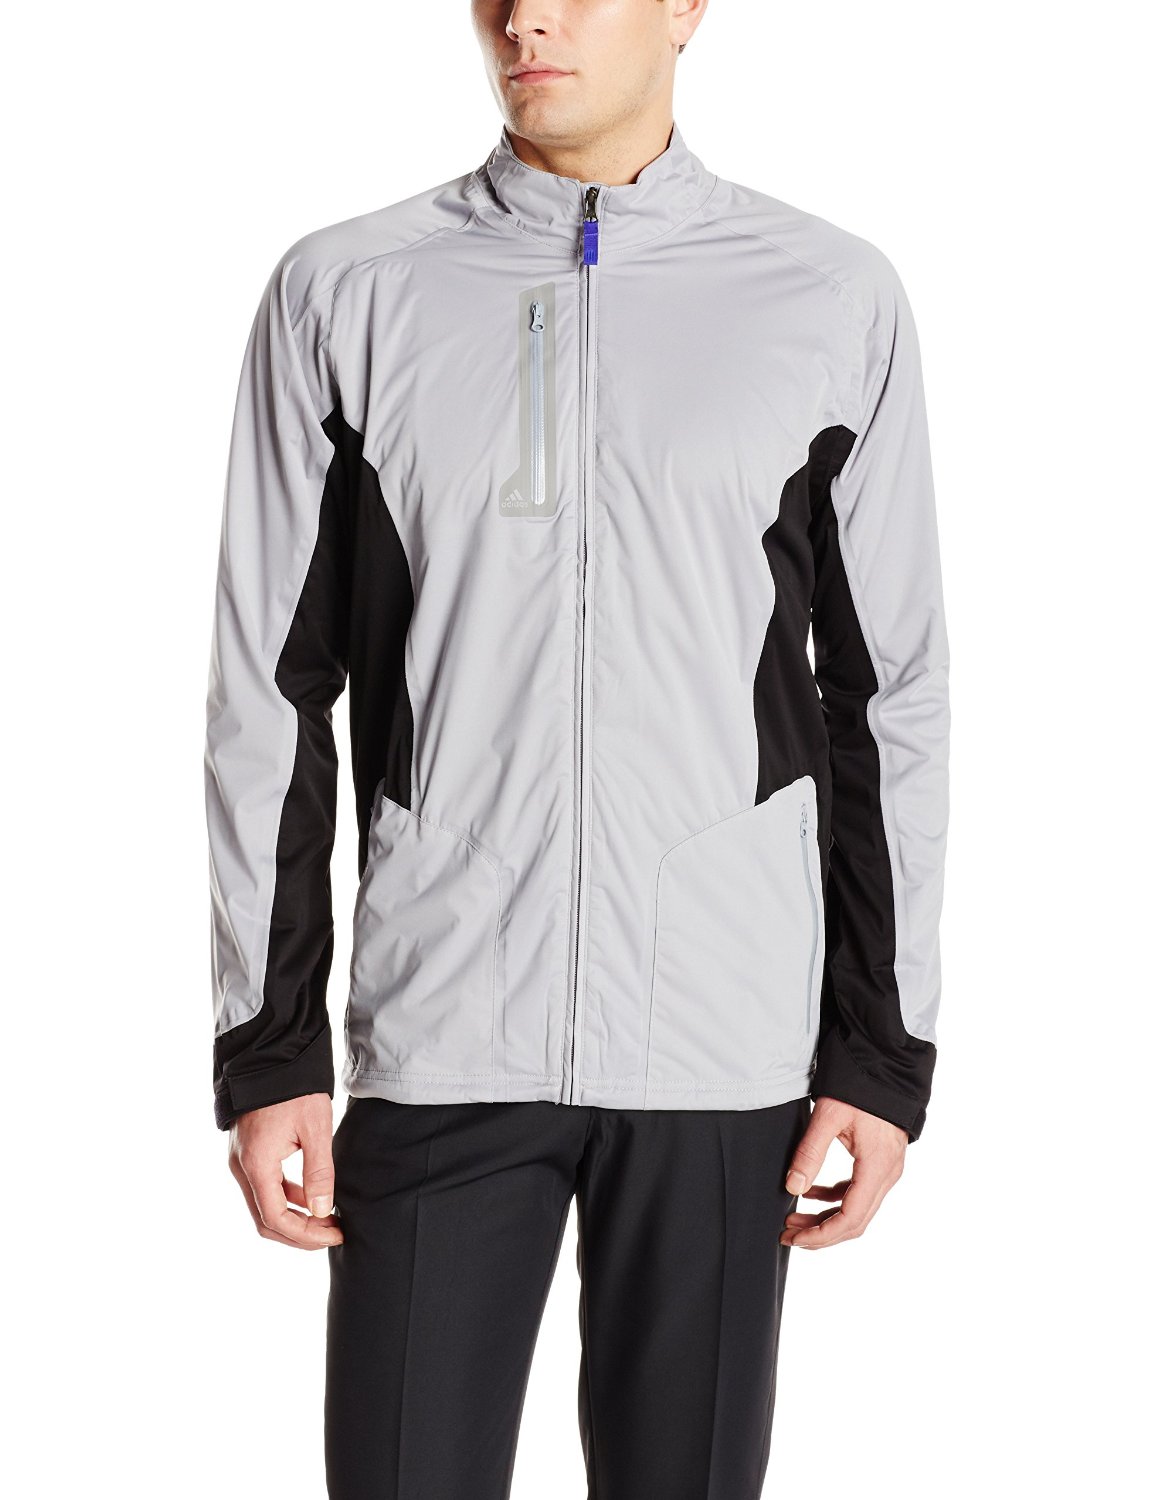 adidas men's climaproof golf rain jacket